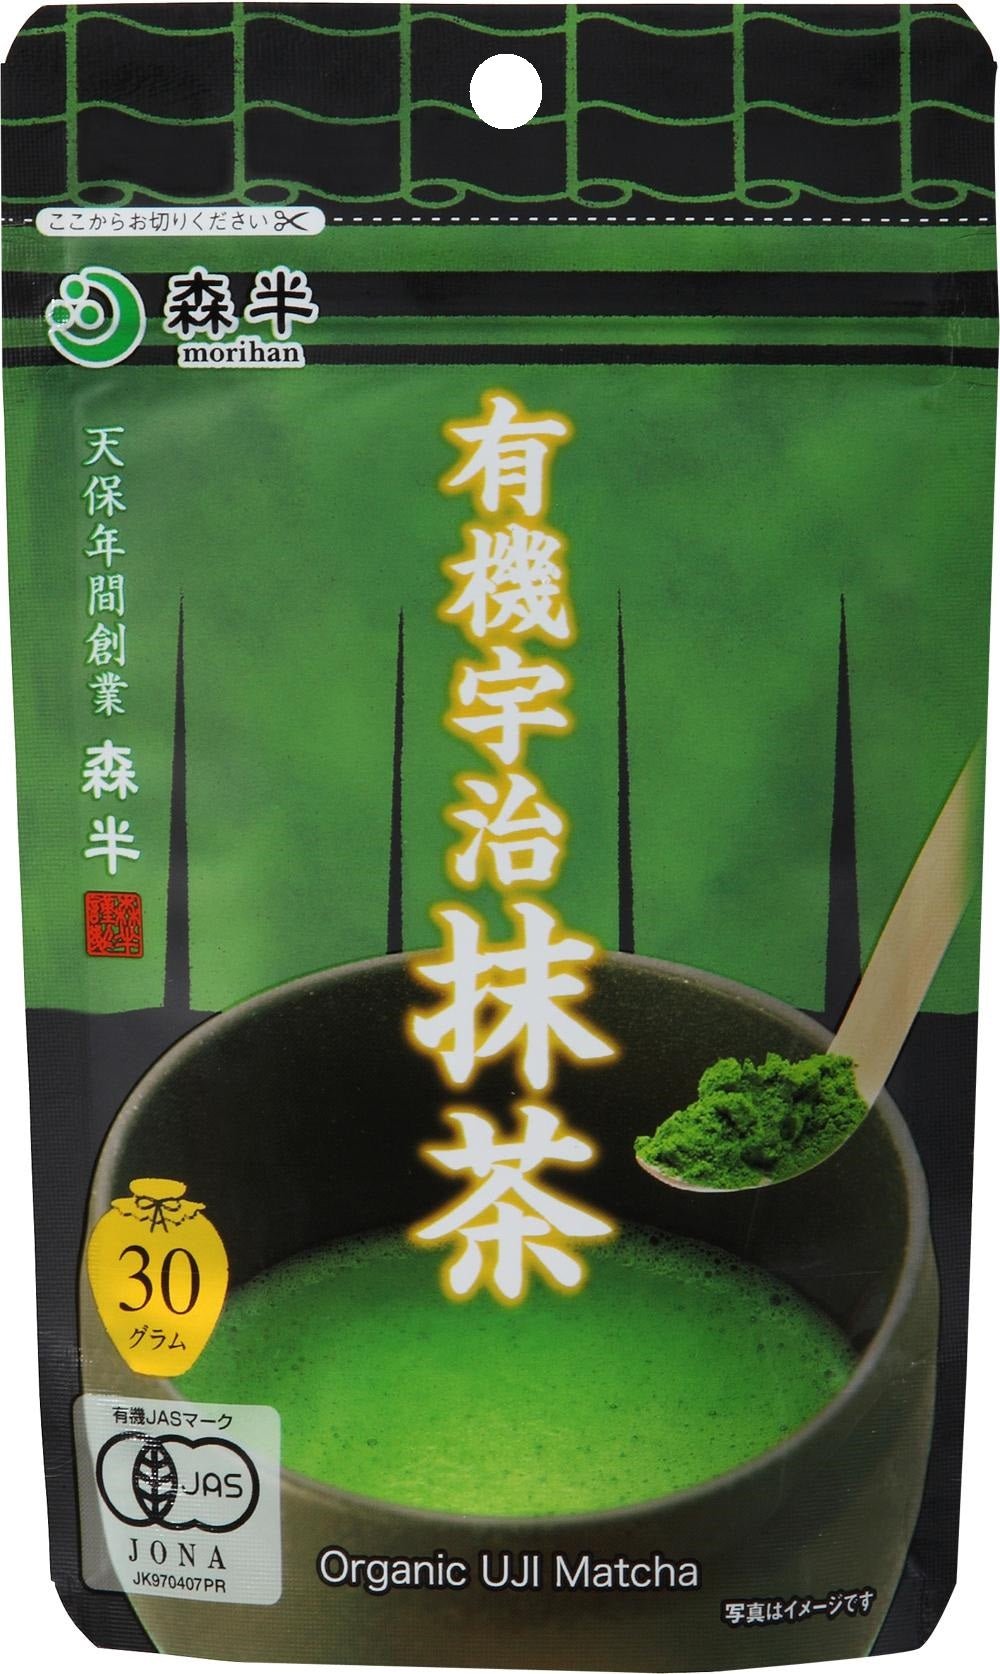 Kyoeiseicha Organic UJI Matcha 30g - Tokyo Fresh Direct